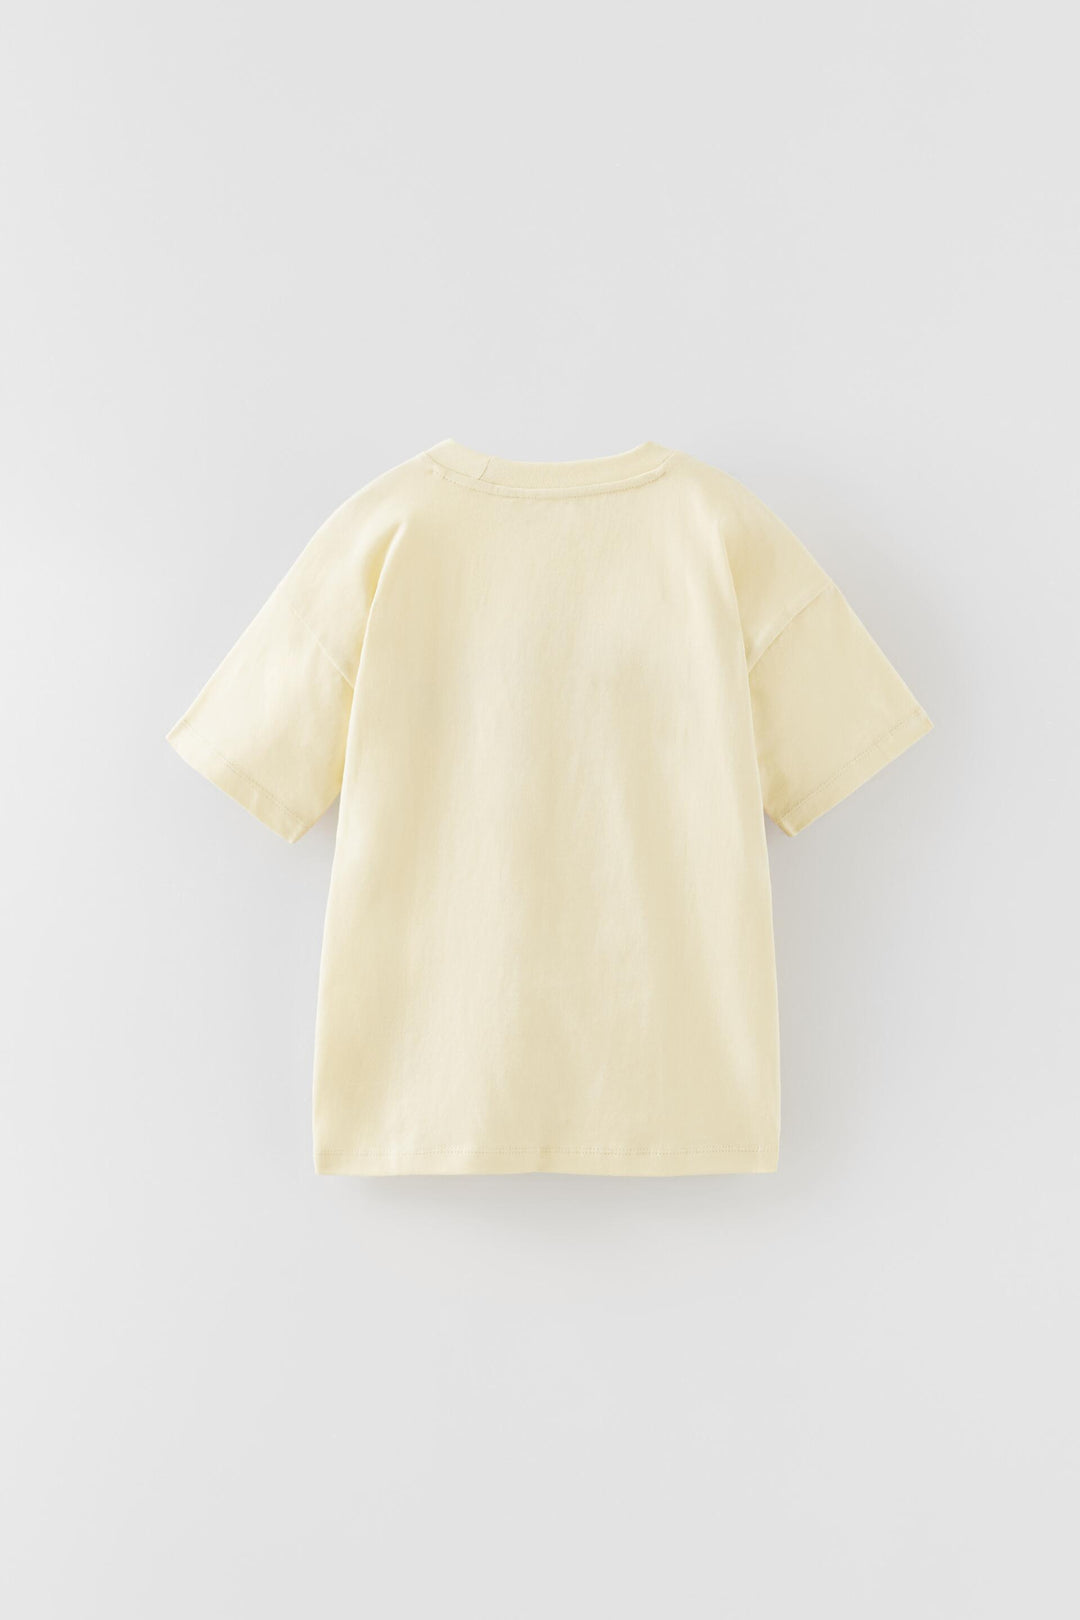 T-Shirt marque_Zara, genre_Garçon, Enfant Moudda Tunisie1